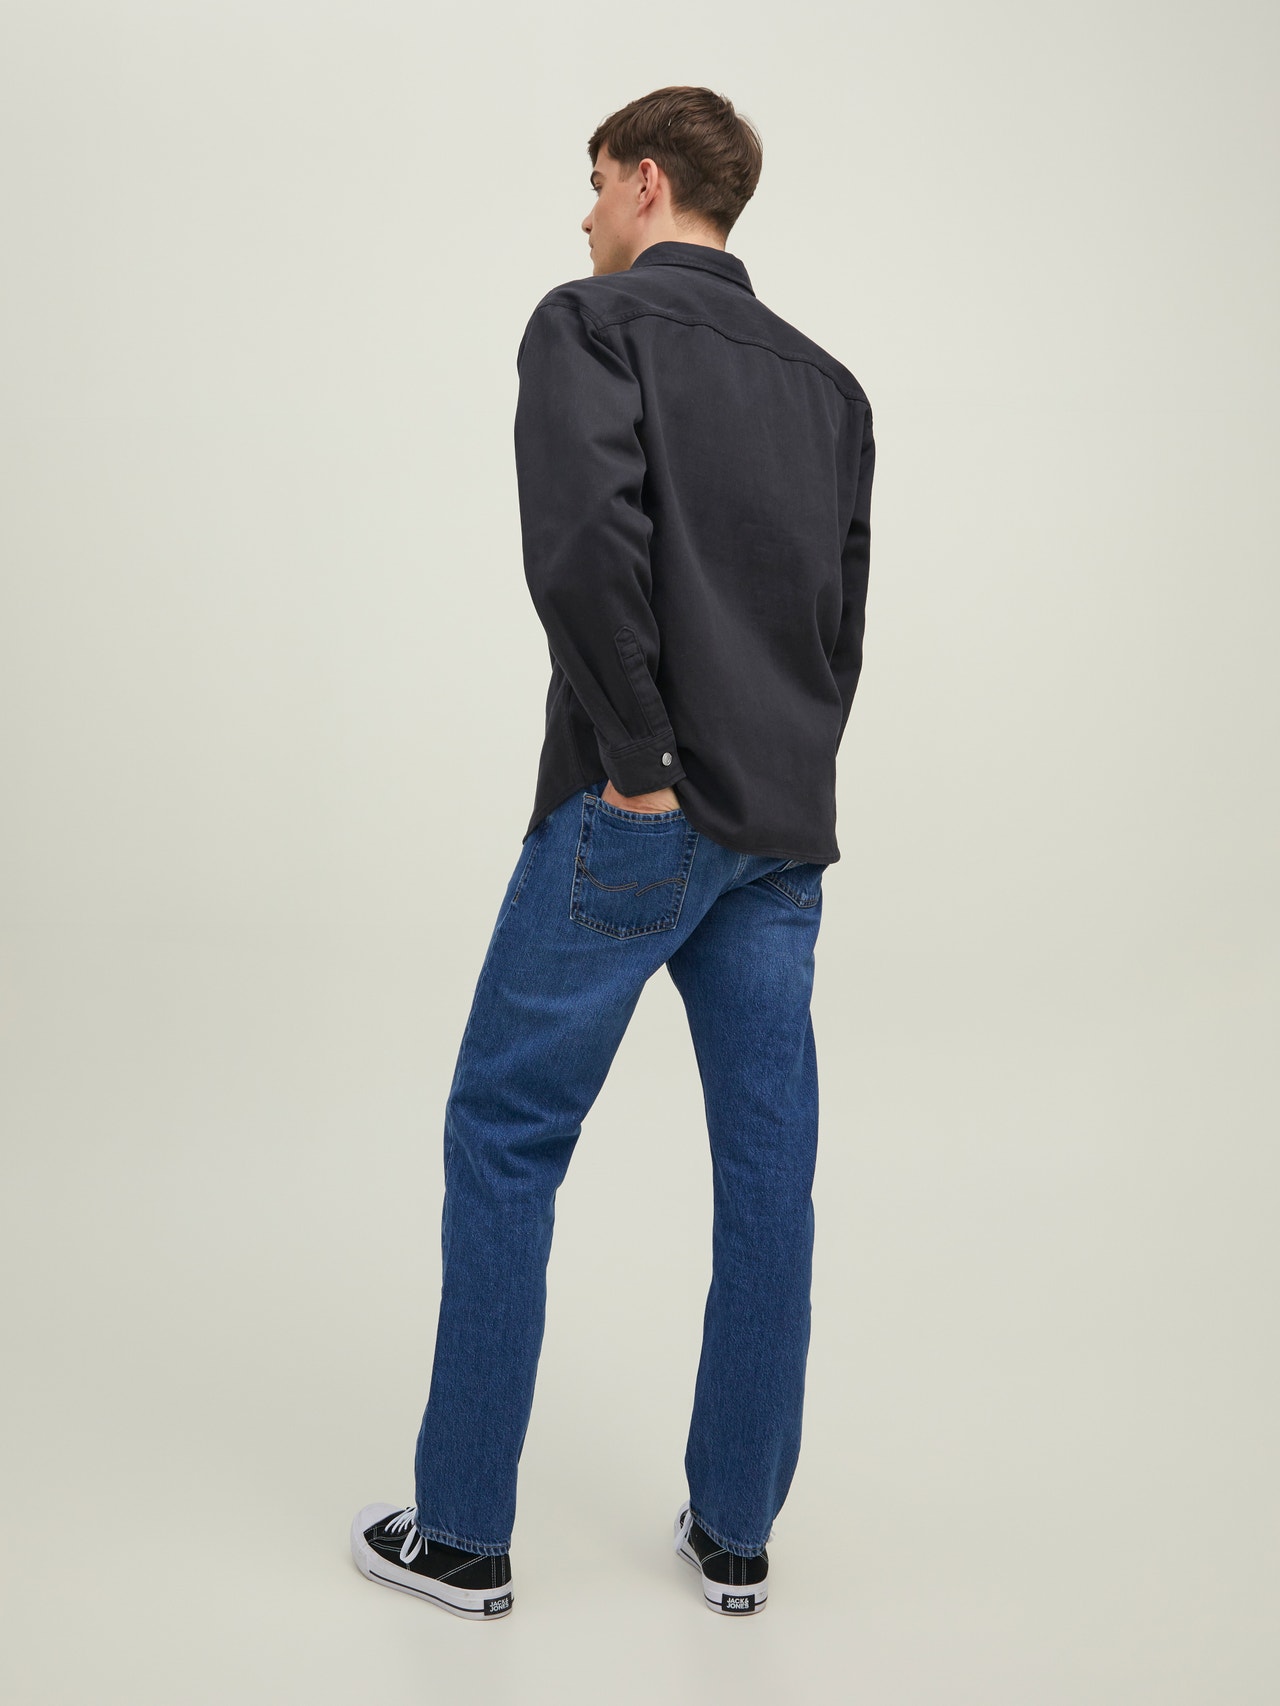 Jack & Jones Camicia casual Regular Fit -Black - 12217980